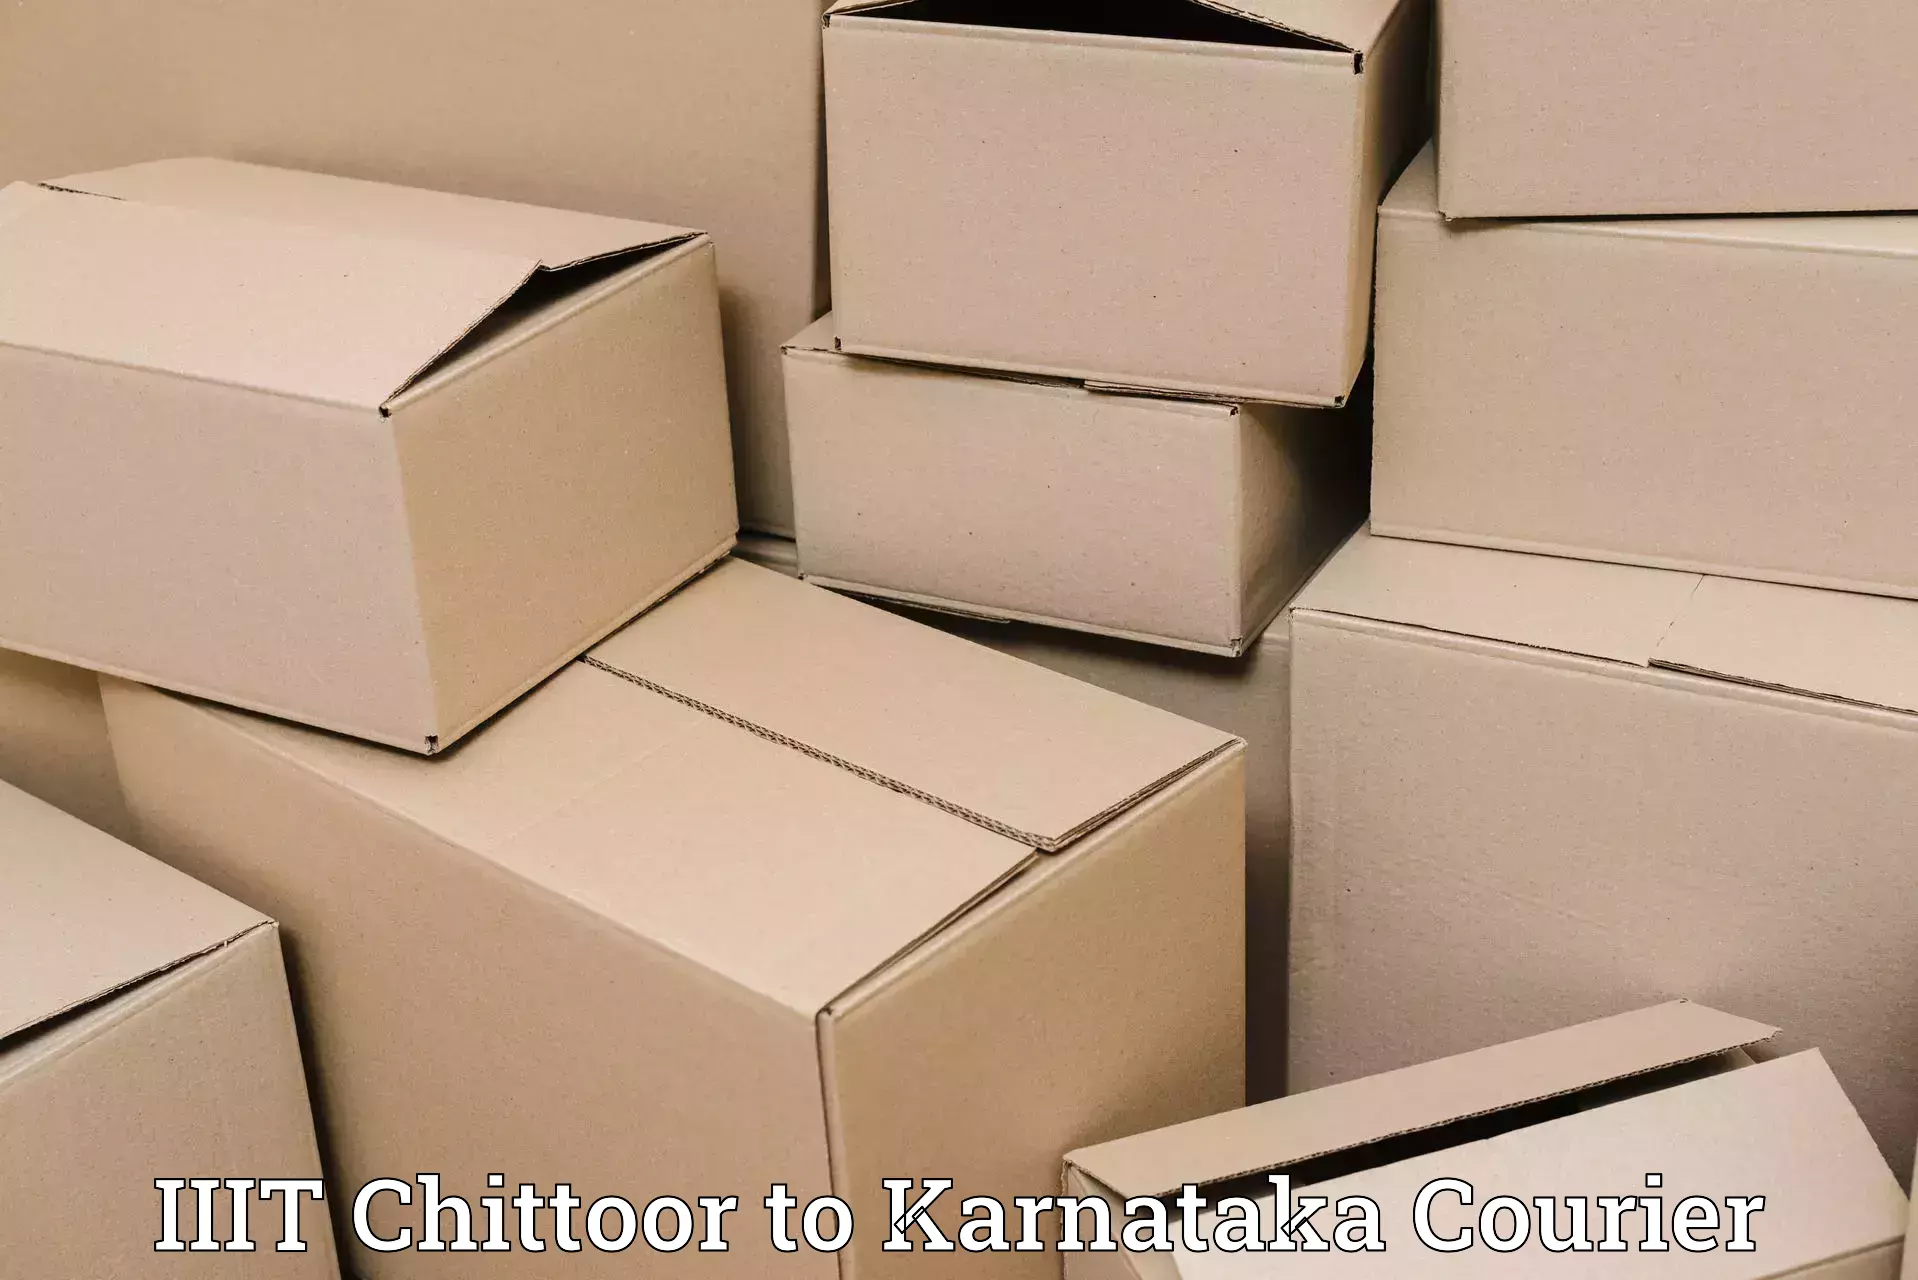 Multi-service courier options IIIT Chittoor to Gokak